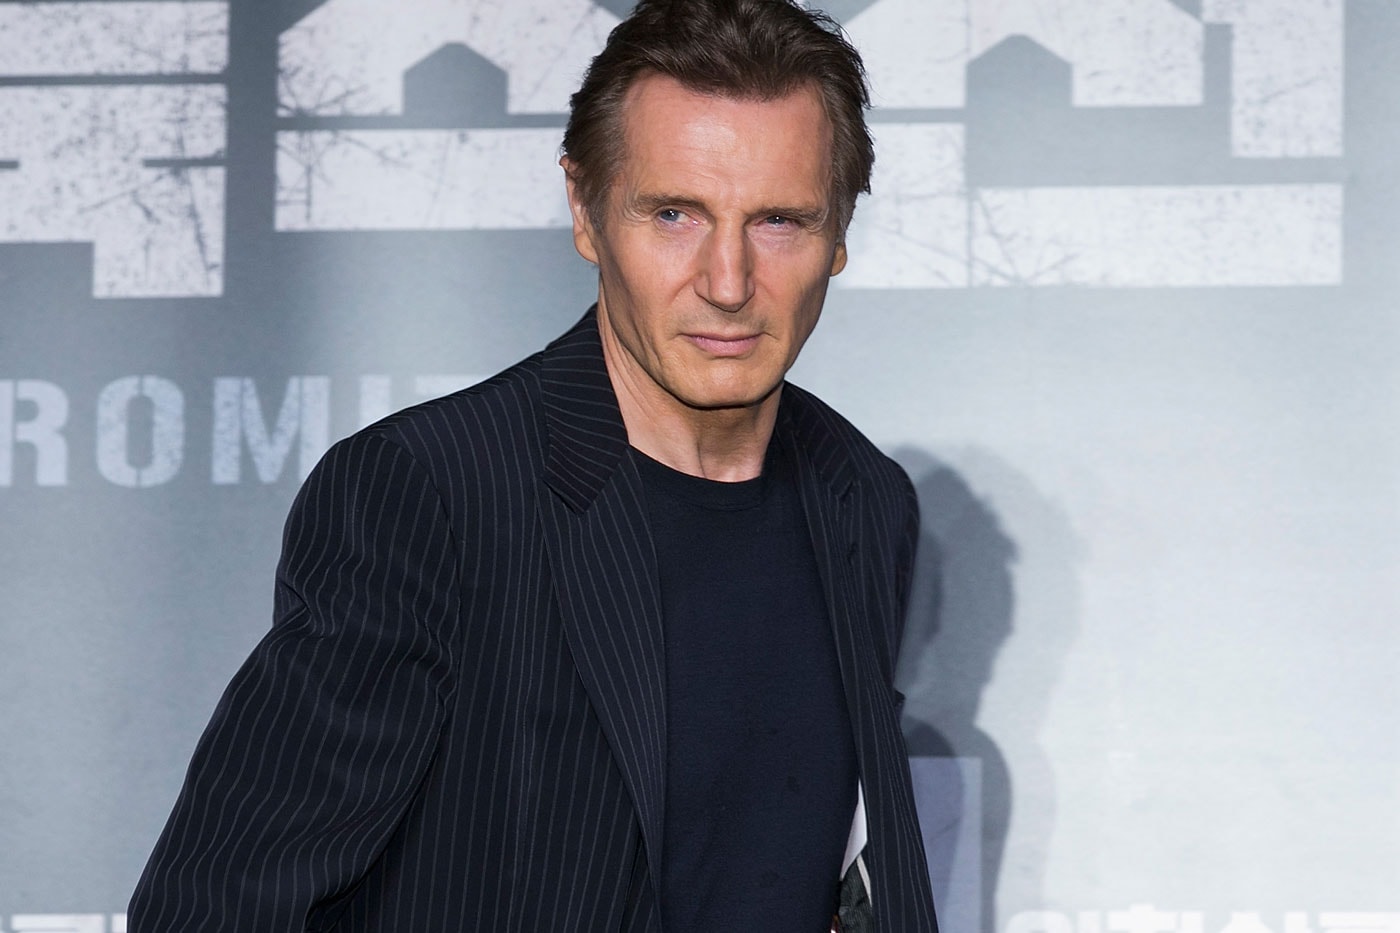 Seth MacFarlane Liam Neeson Star The Naked Gun Reboot paramount studios comedy action family guy american dad 